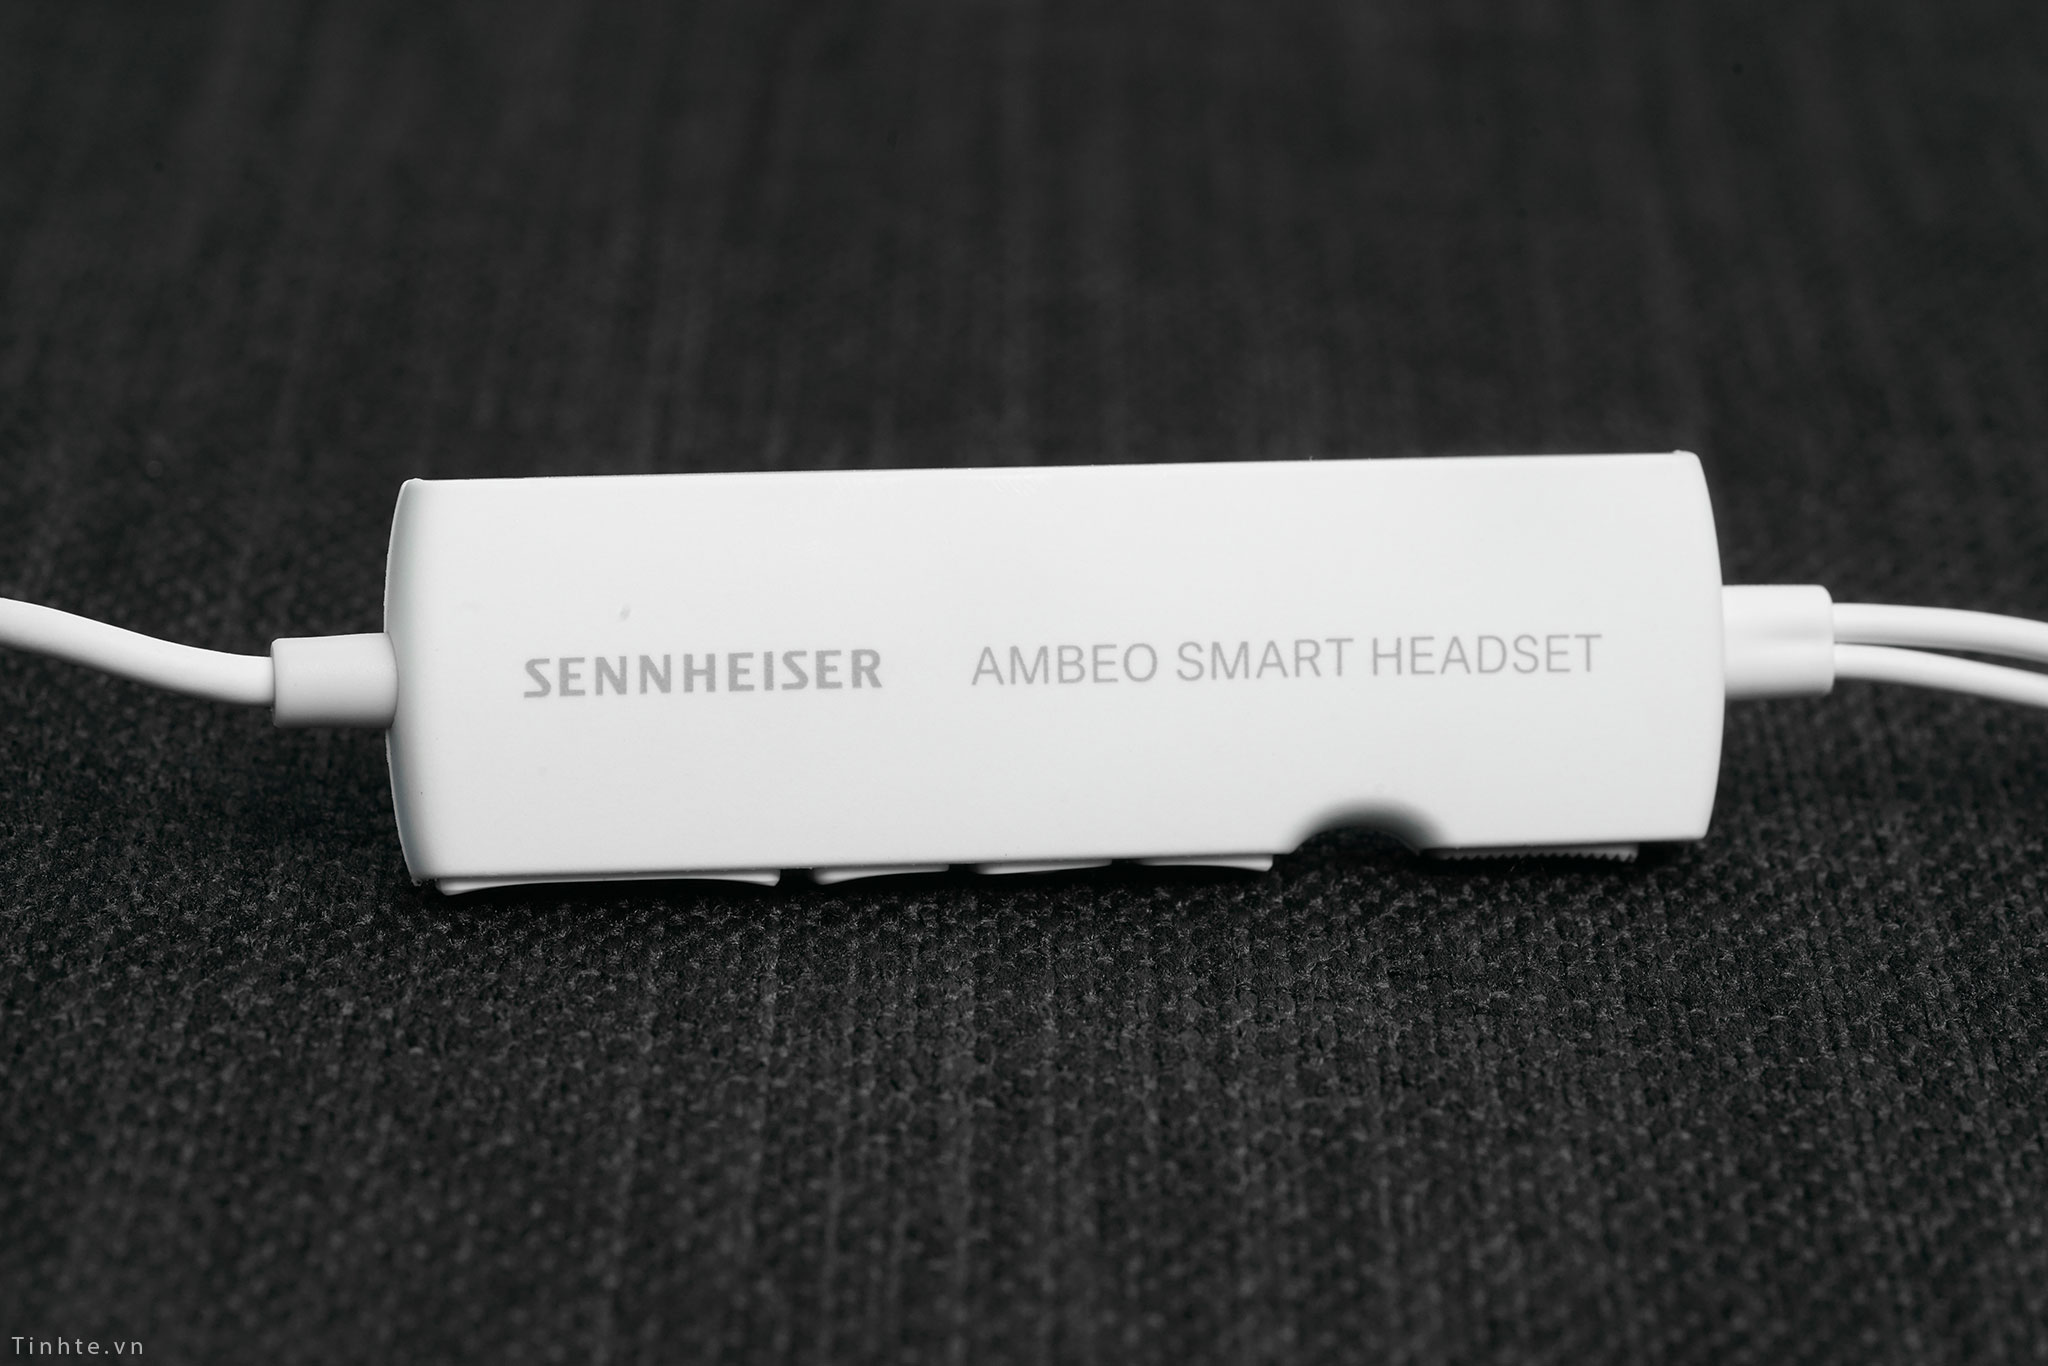 Đang tải tinhte_sennheiser_ambeo_smart_headset_review (2).jpg…